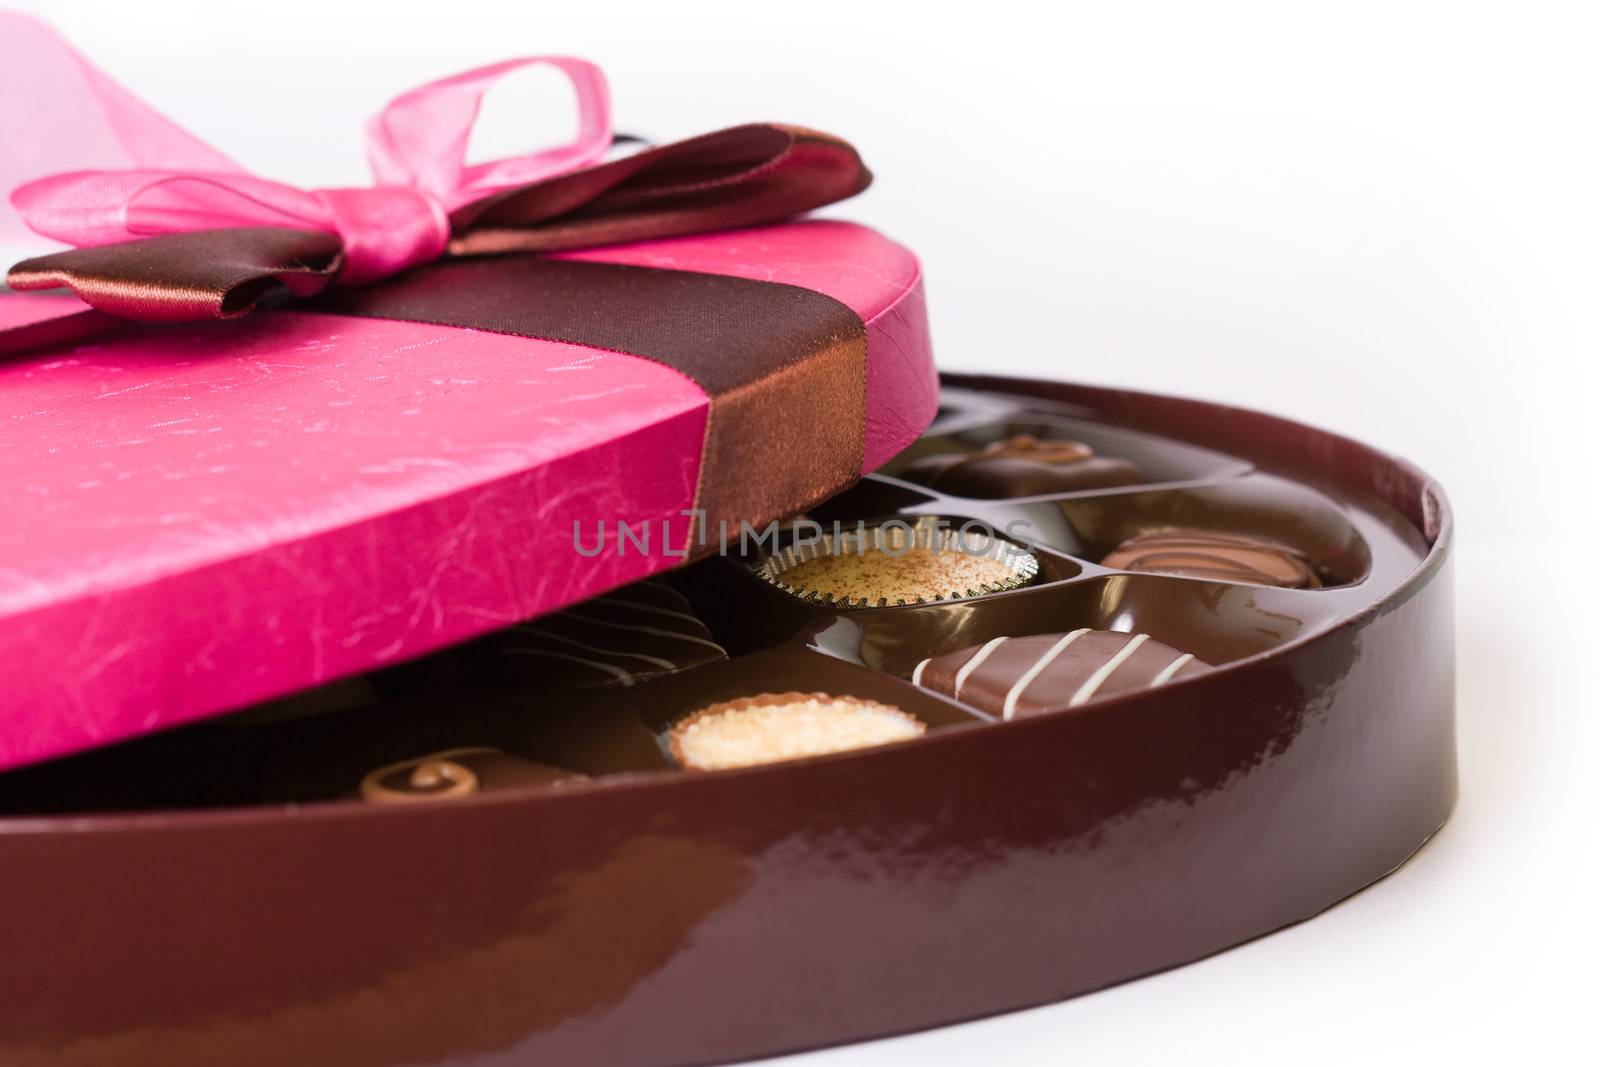 Box of chocolates by RuthBlack